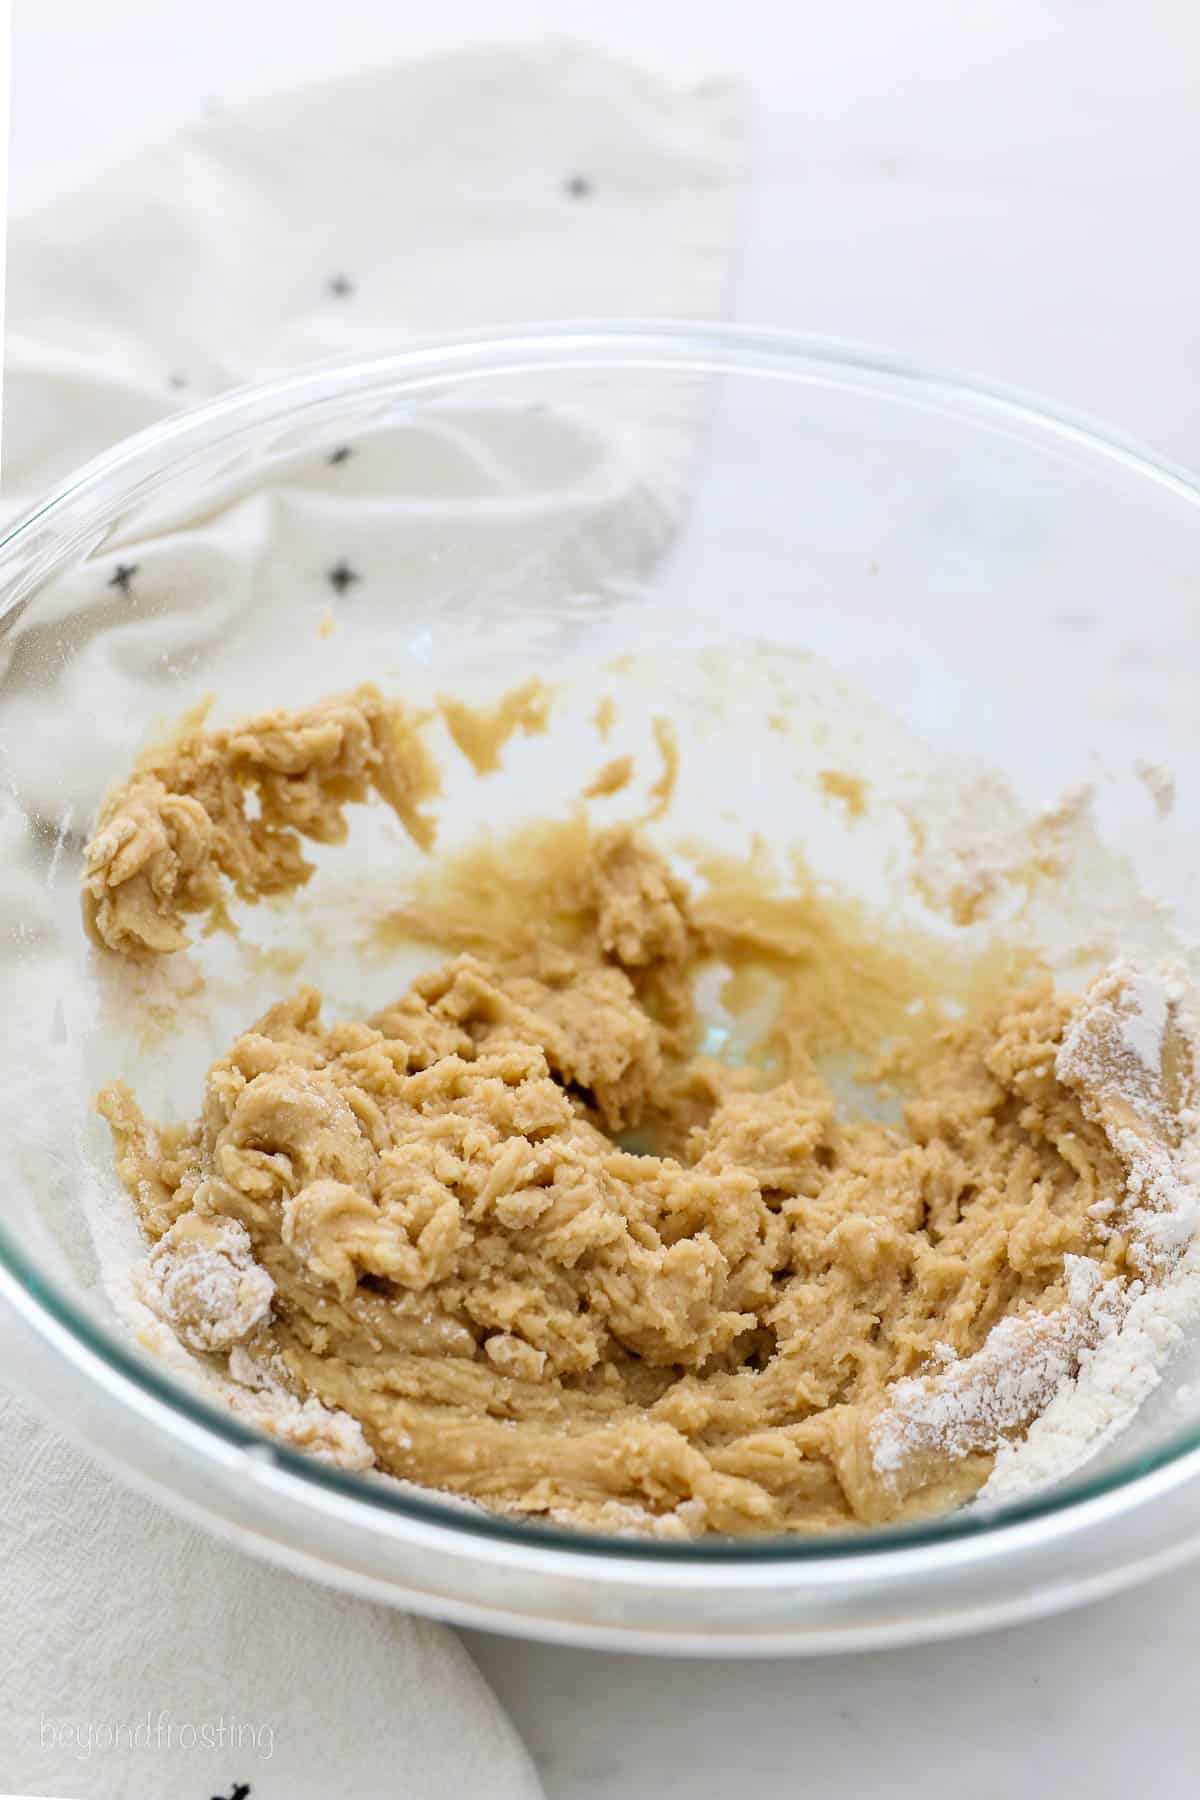 Beaten cookie dough in a glass mixing bowl.